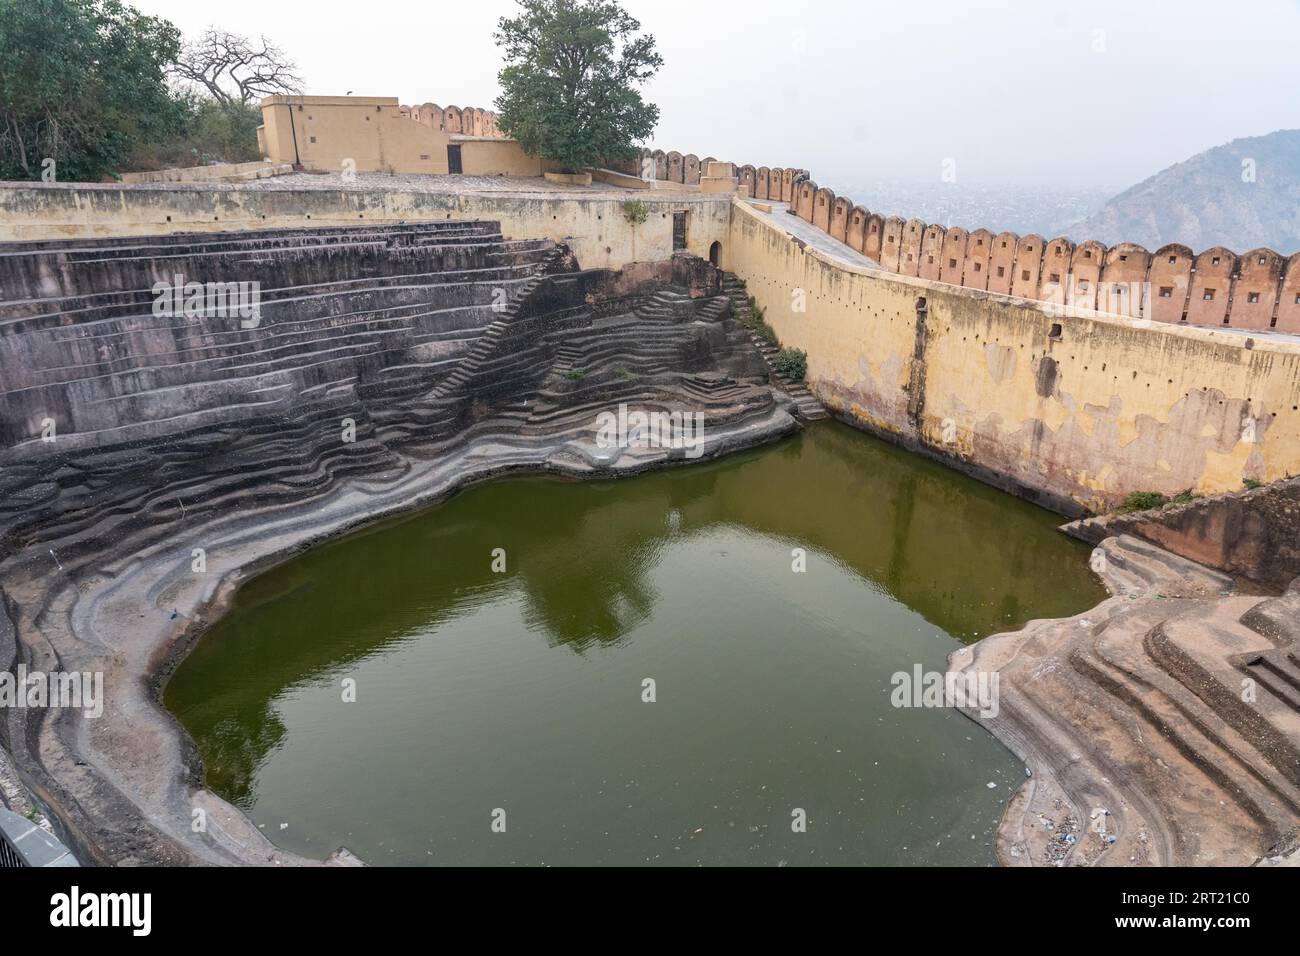 Jaipur, India, December 12, 2019: The historic step well inside Nahargarh Fort Stock Photo